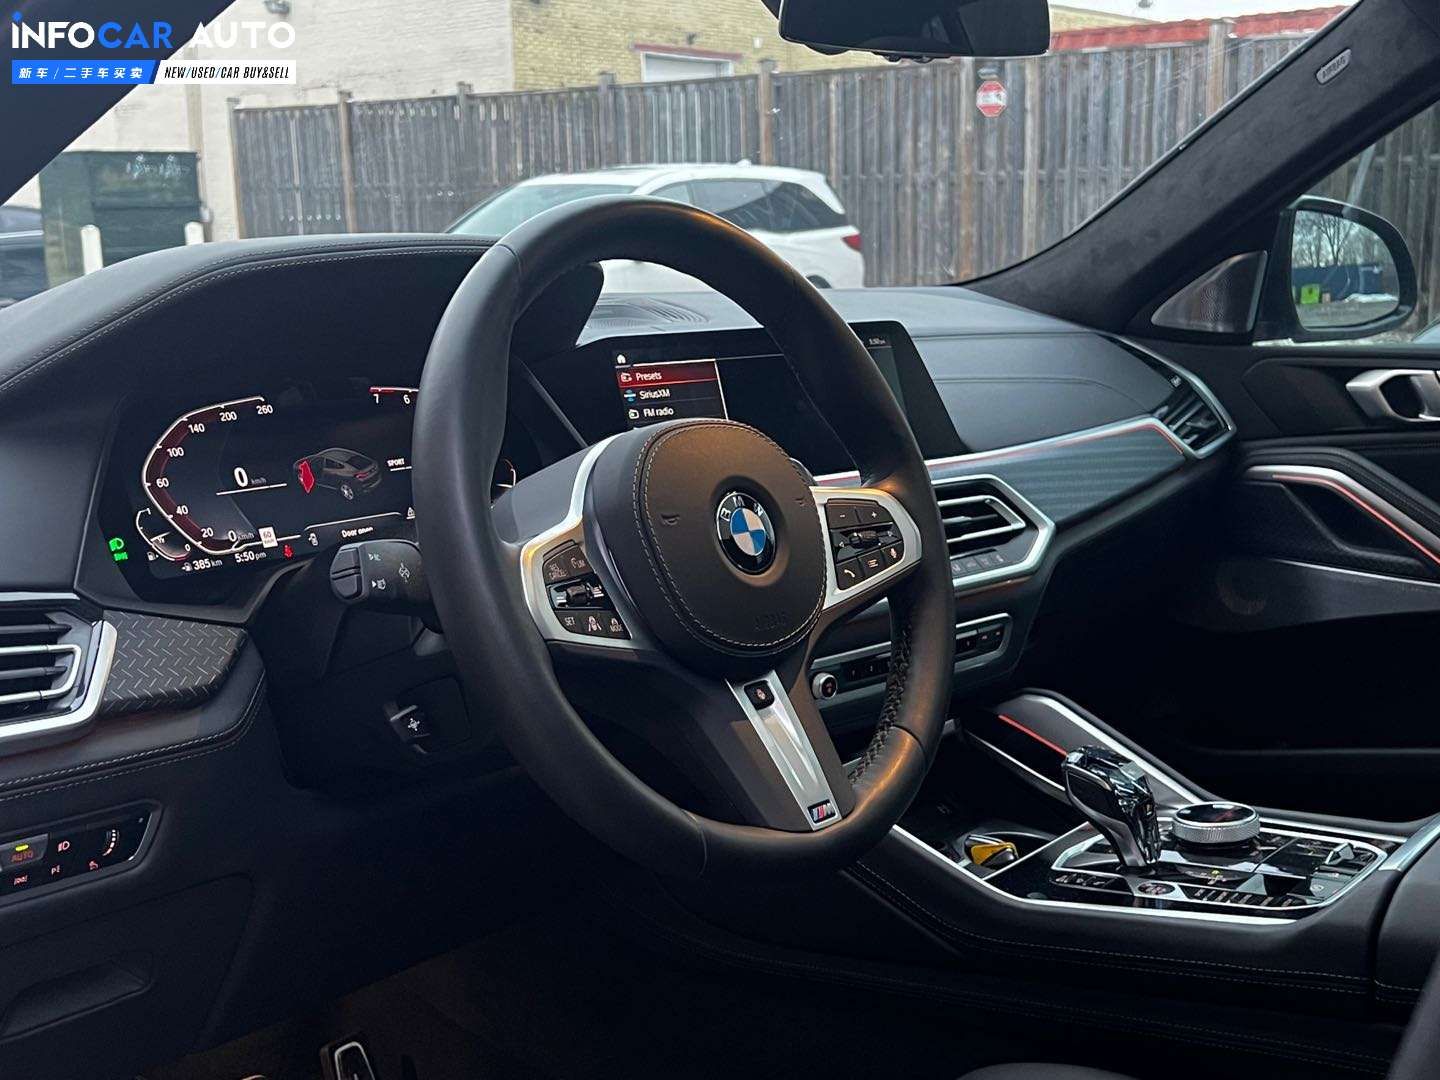 2022 BMW X6 40i BLACK VERMILION EDITION - INFOCAR - Toronto Auto Trading Platform